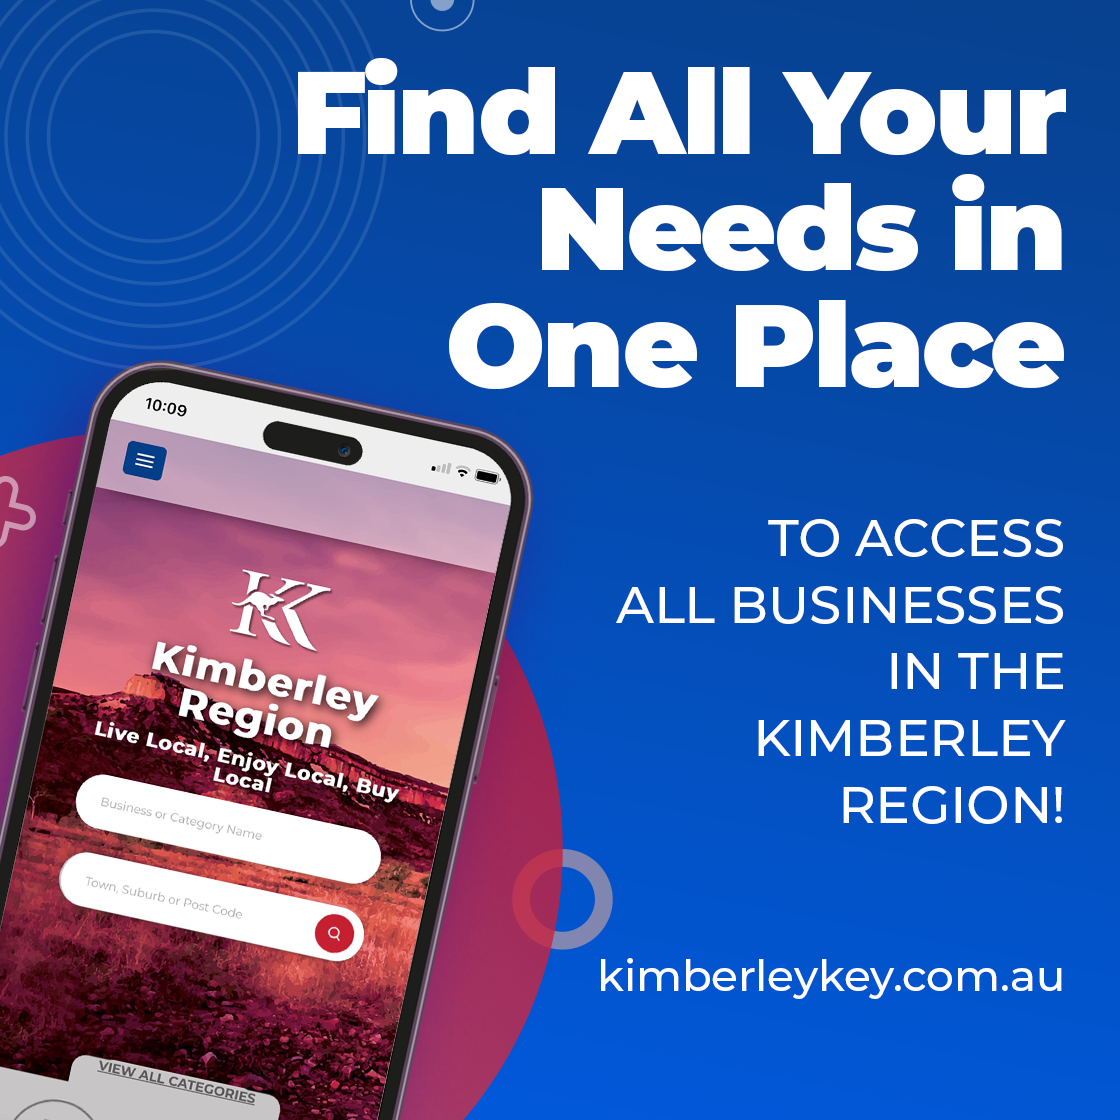 Kimberley Custom Fabrications